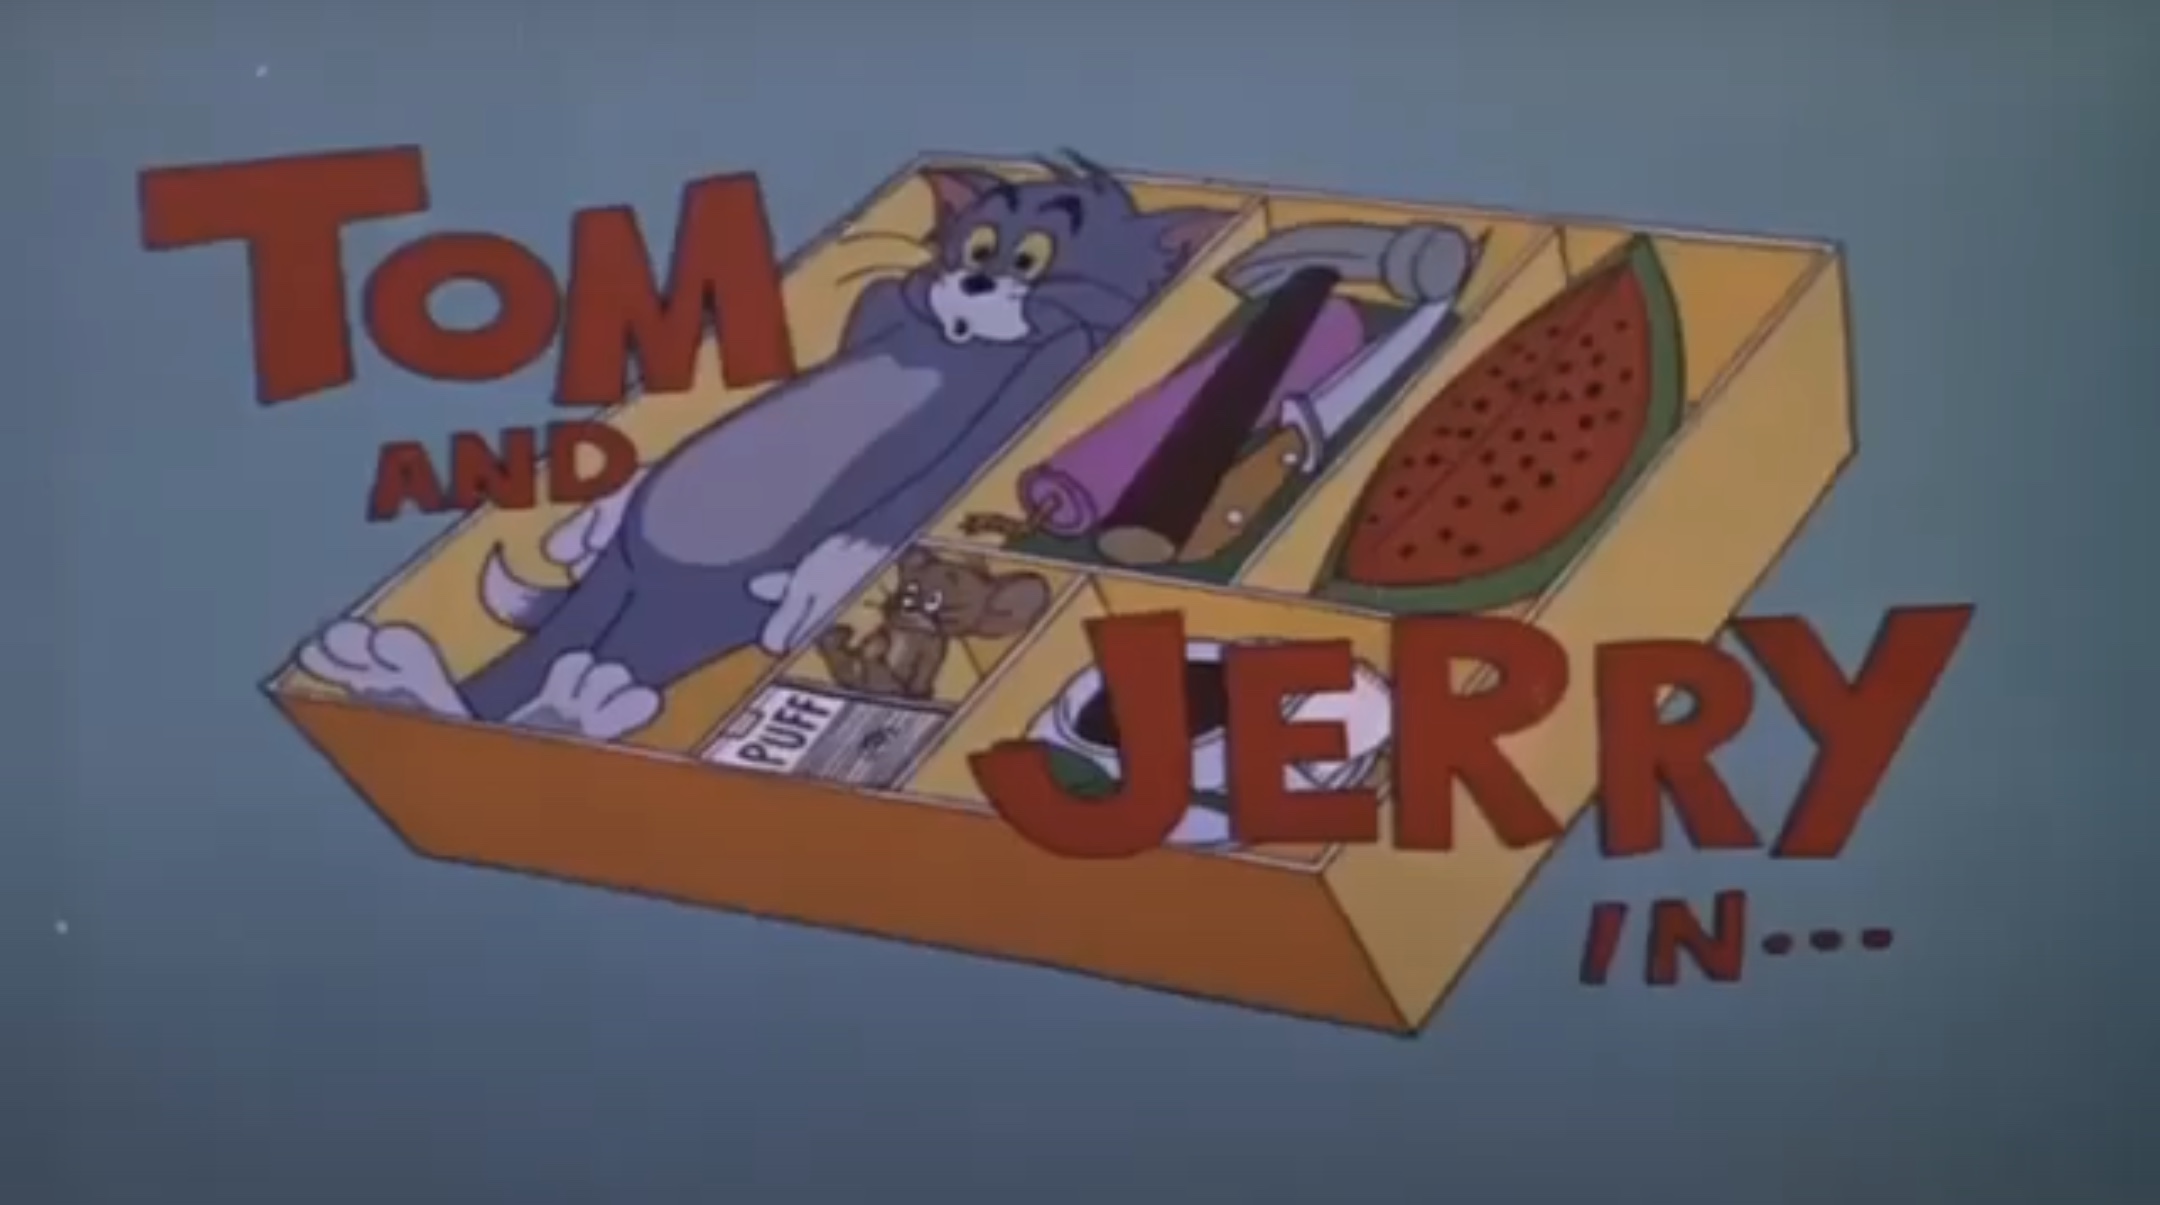 tom jerry cartoon kit